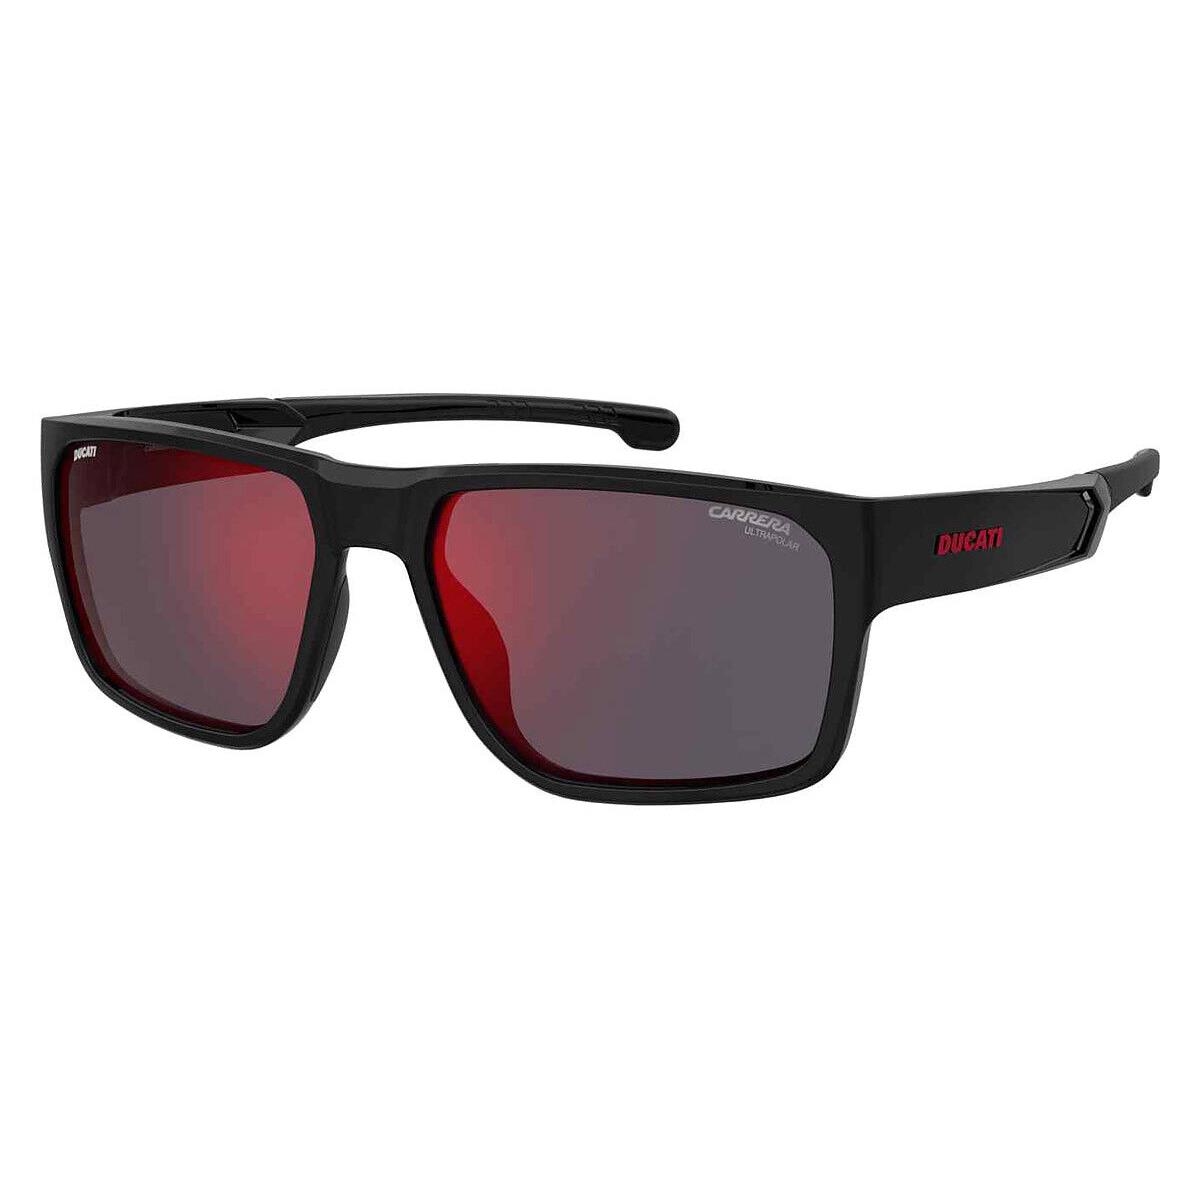 Carrera Carduc 029/S Sunglasses Men Black 59mm - Frame: Black, Lens: Red Mirrored Polarized High Contrast